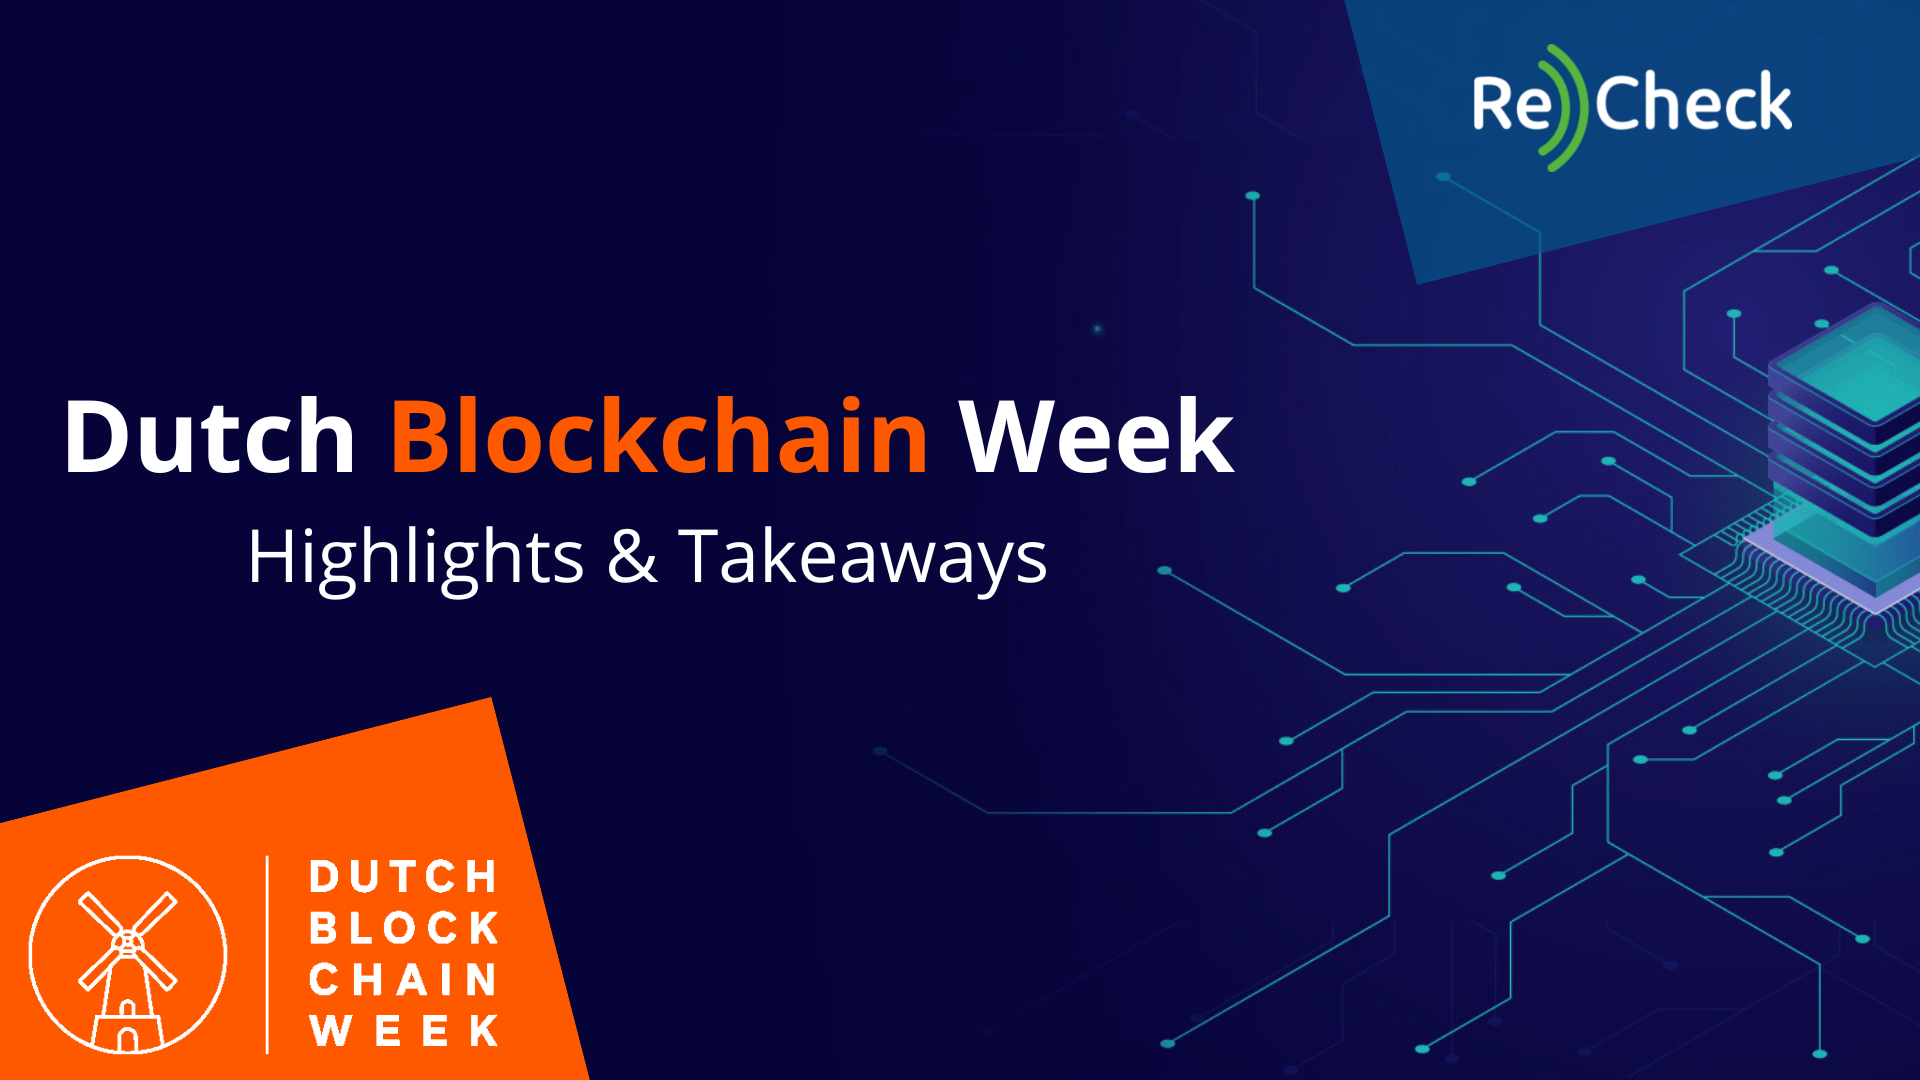 What are the key takeaways from Dutch Blockchain Week (DBW)?